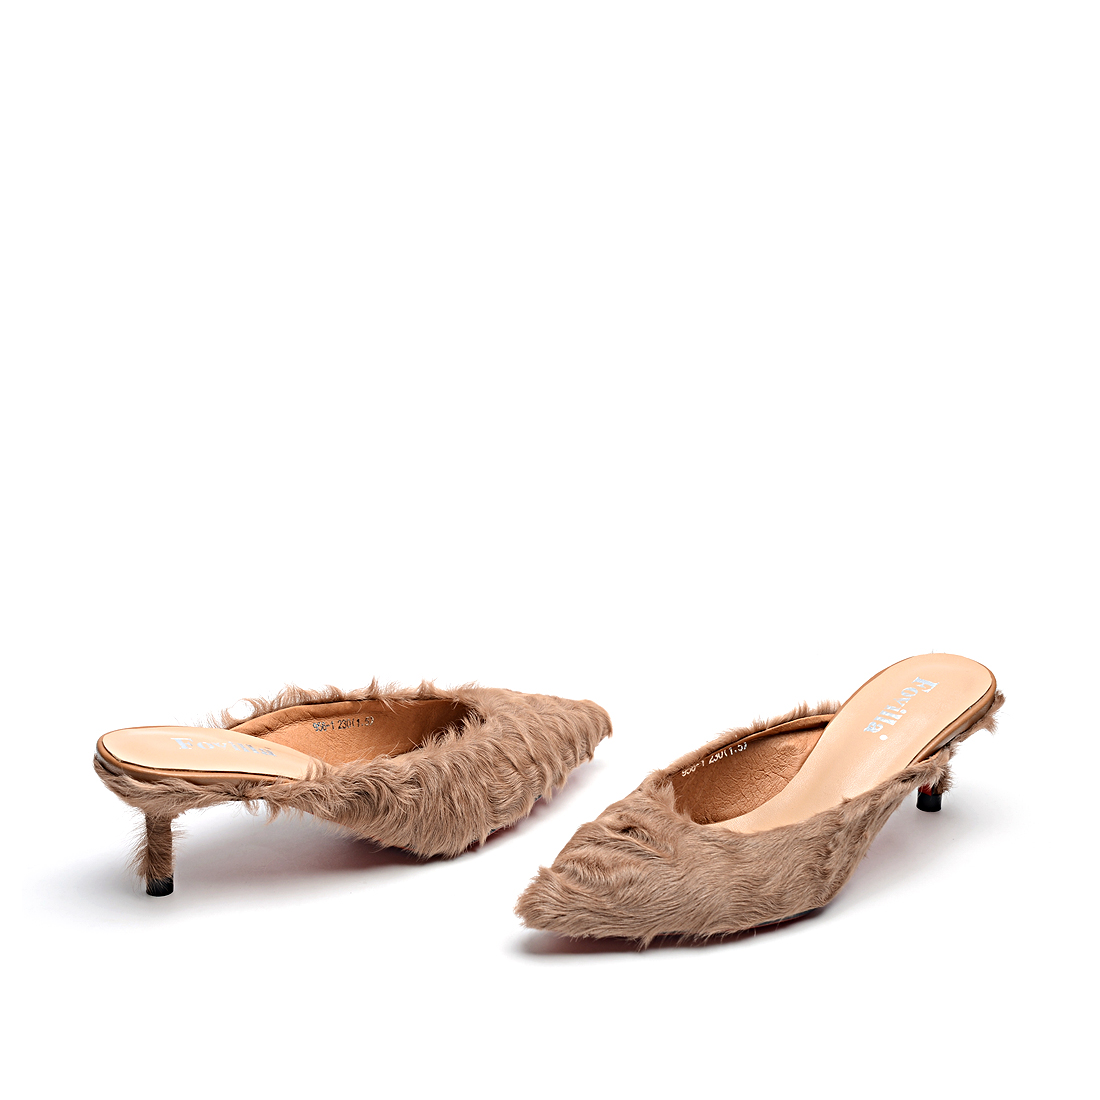 [Fovilla]欧美风简约羊毛织物拖鞋(尺码标准)
编号：A3873T1A17